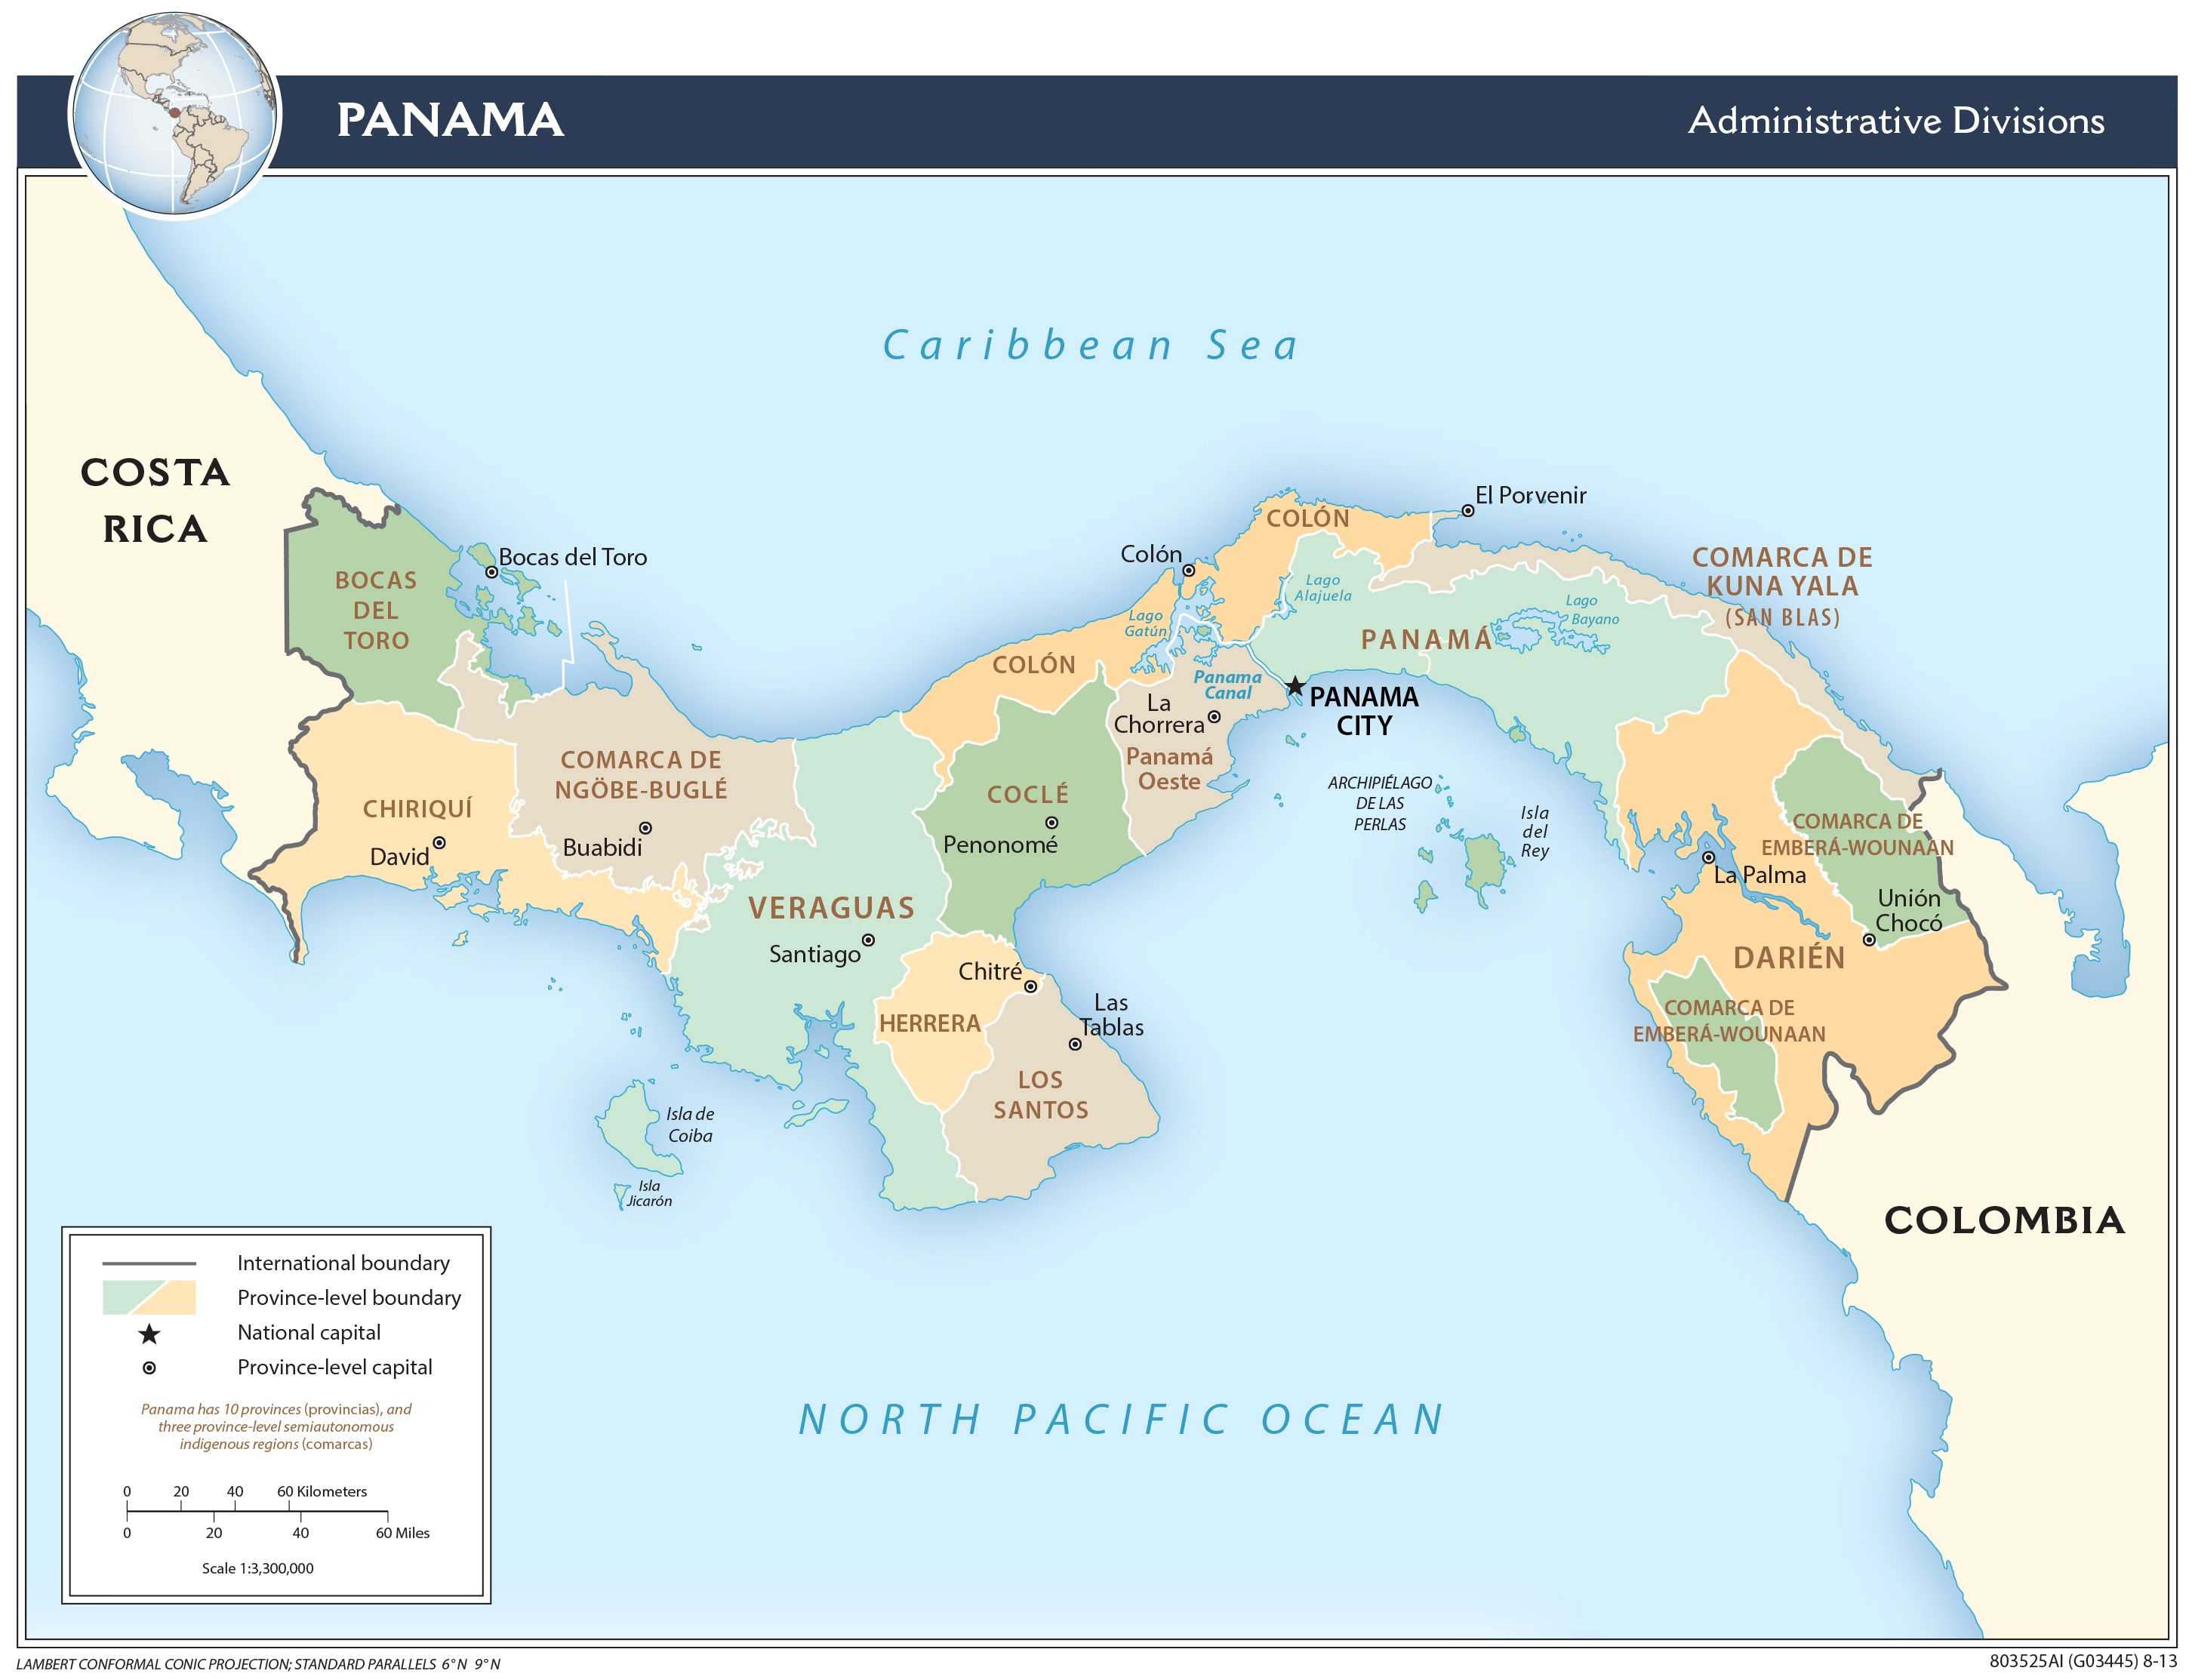 Administrative map of Panama.